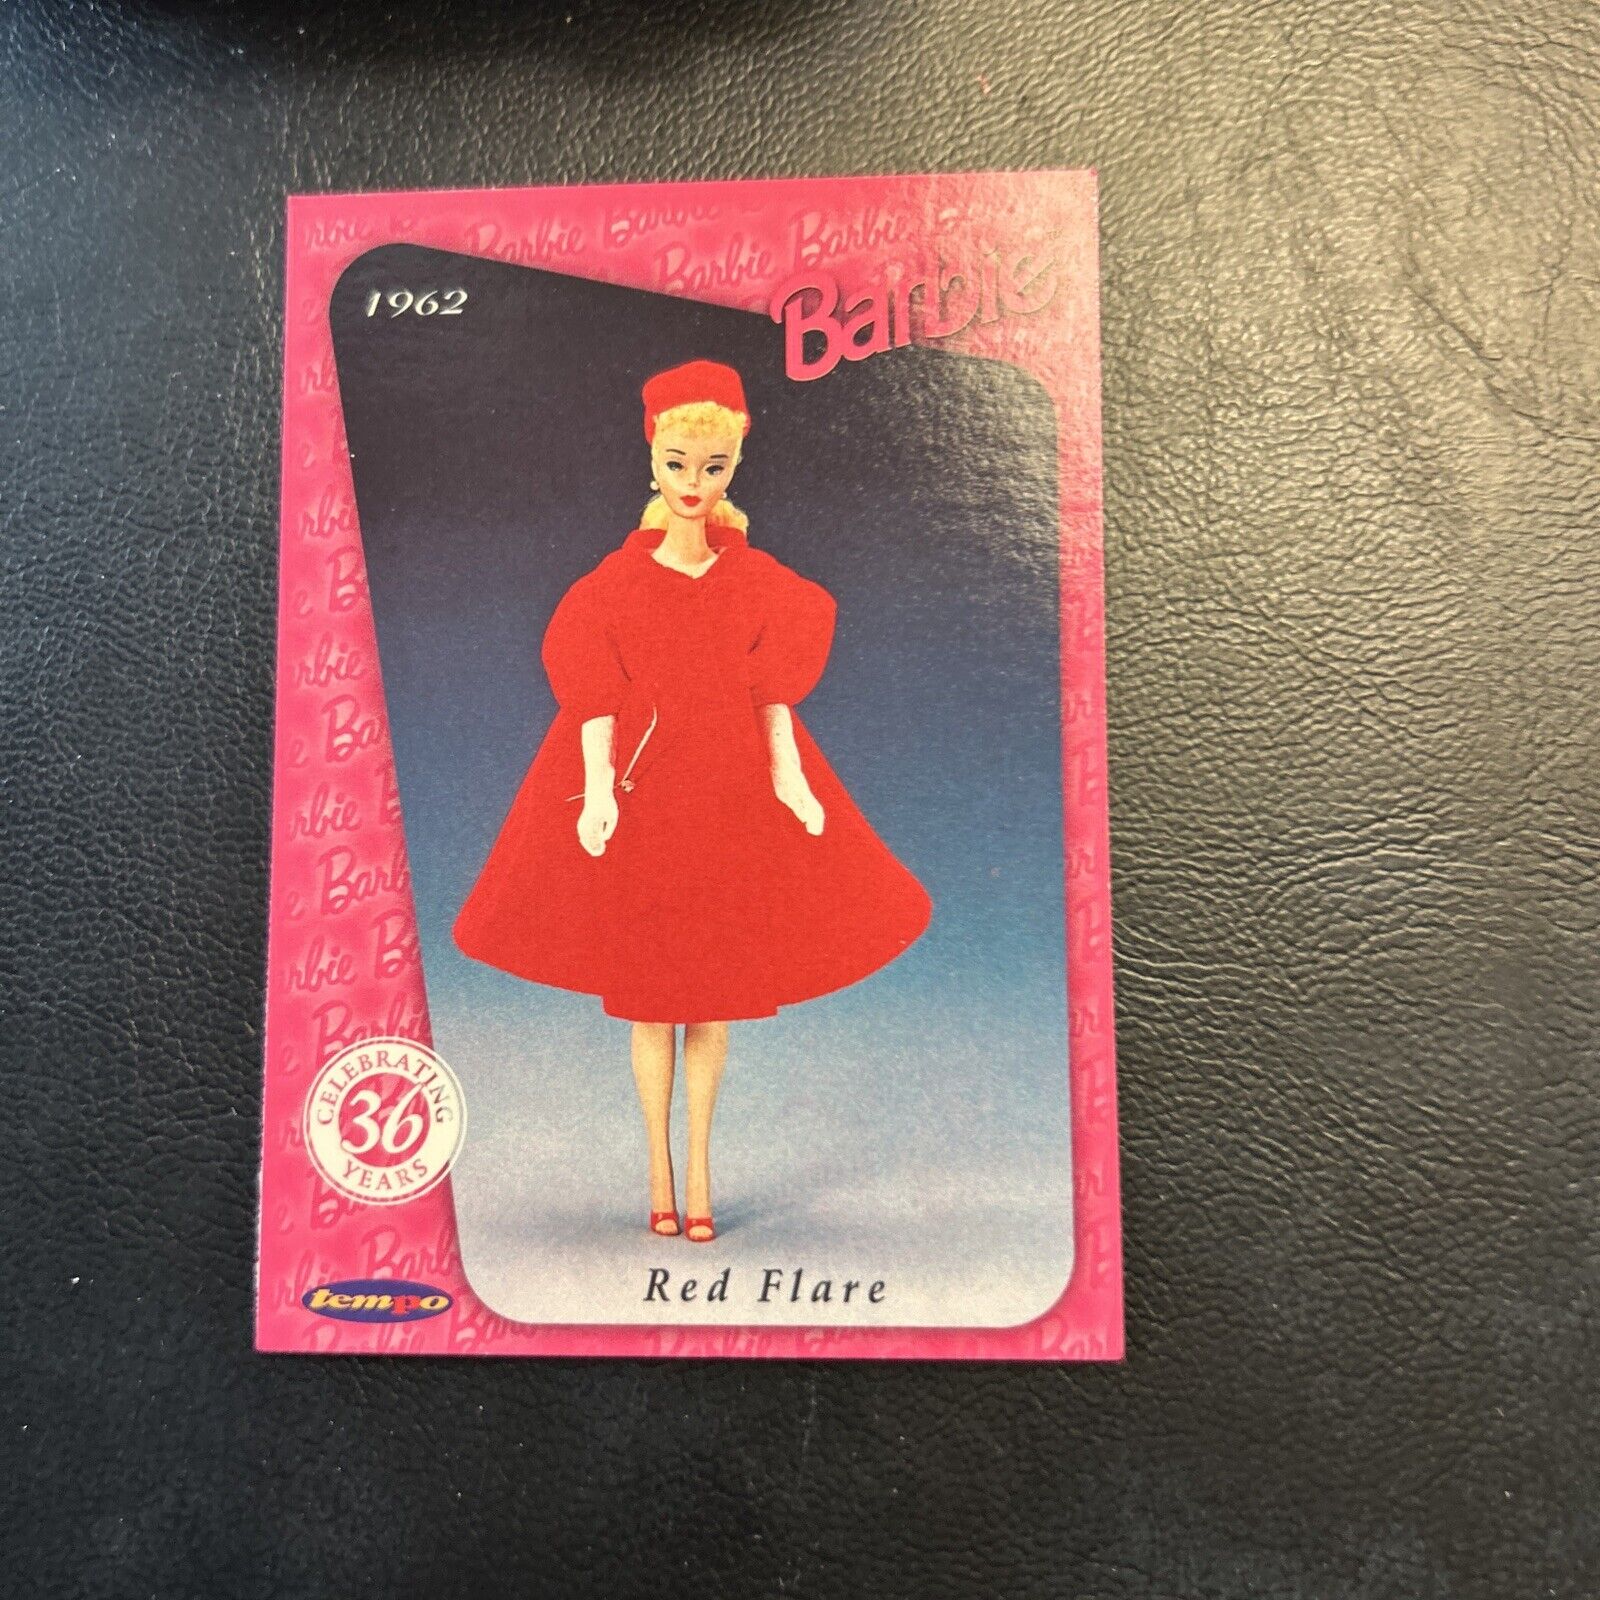 Jb9c Barbie Doll Celebrating 36 Years #8 Red Flare, 1962